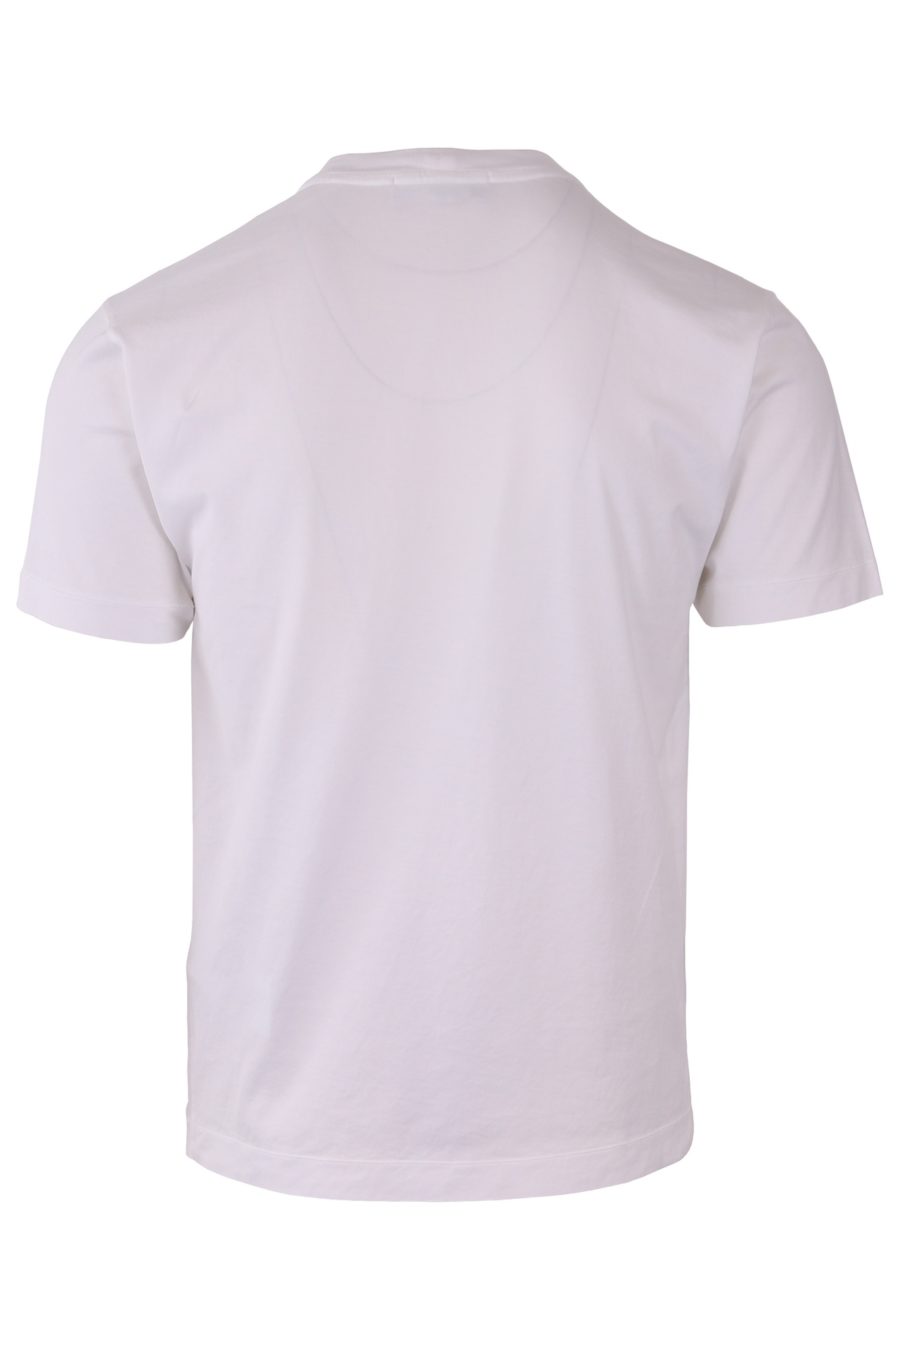 Camiseta Stone Island blanca con logo parche - efc980a7b126e799a38006f3cd825945d6fab36c